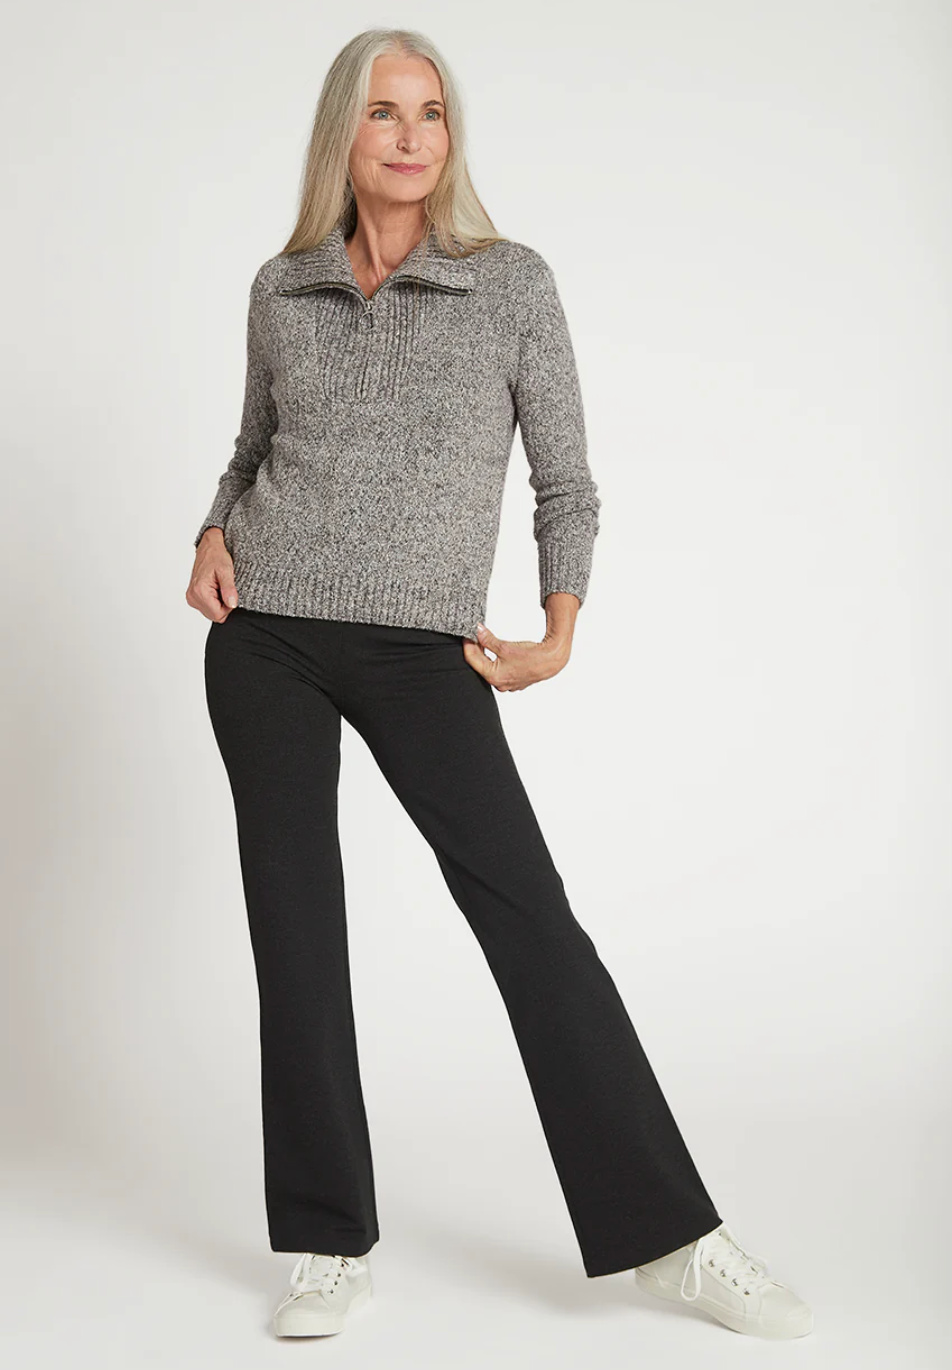 J.Jill Wearever pants Size M - $24 - From Colleen